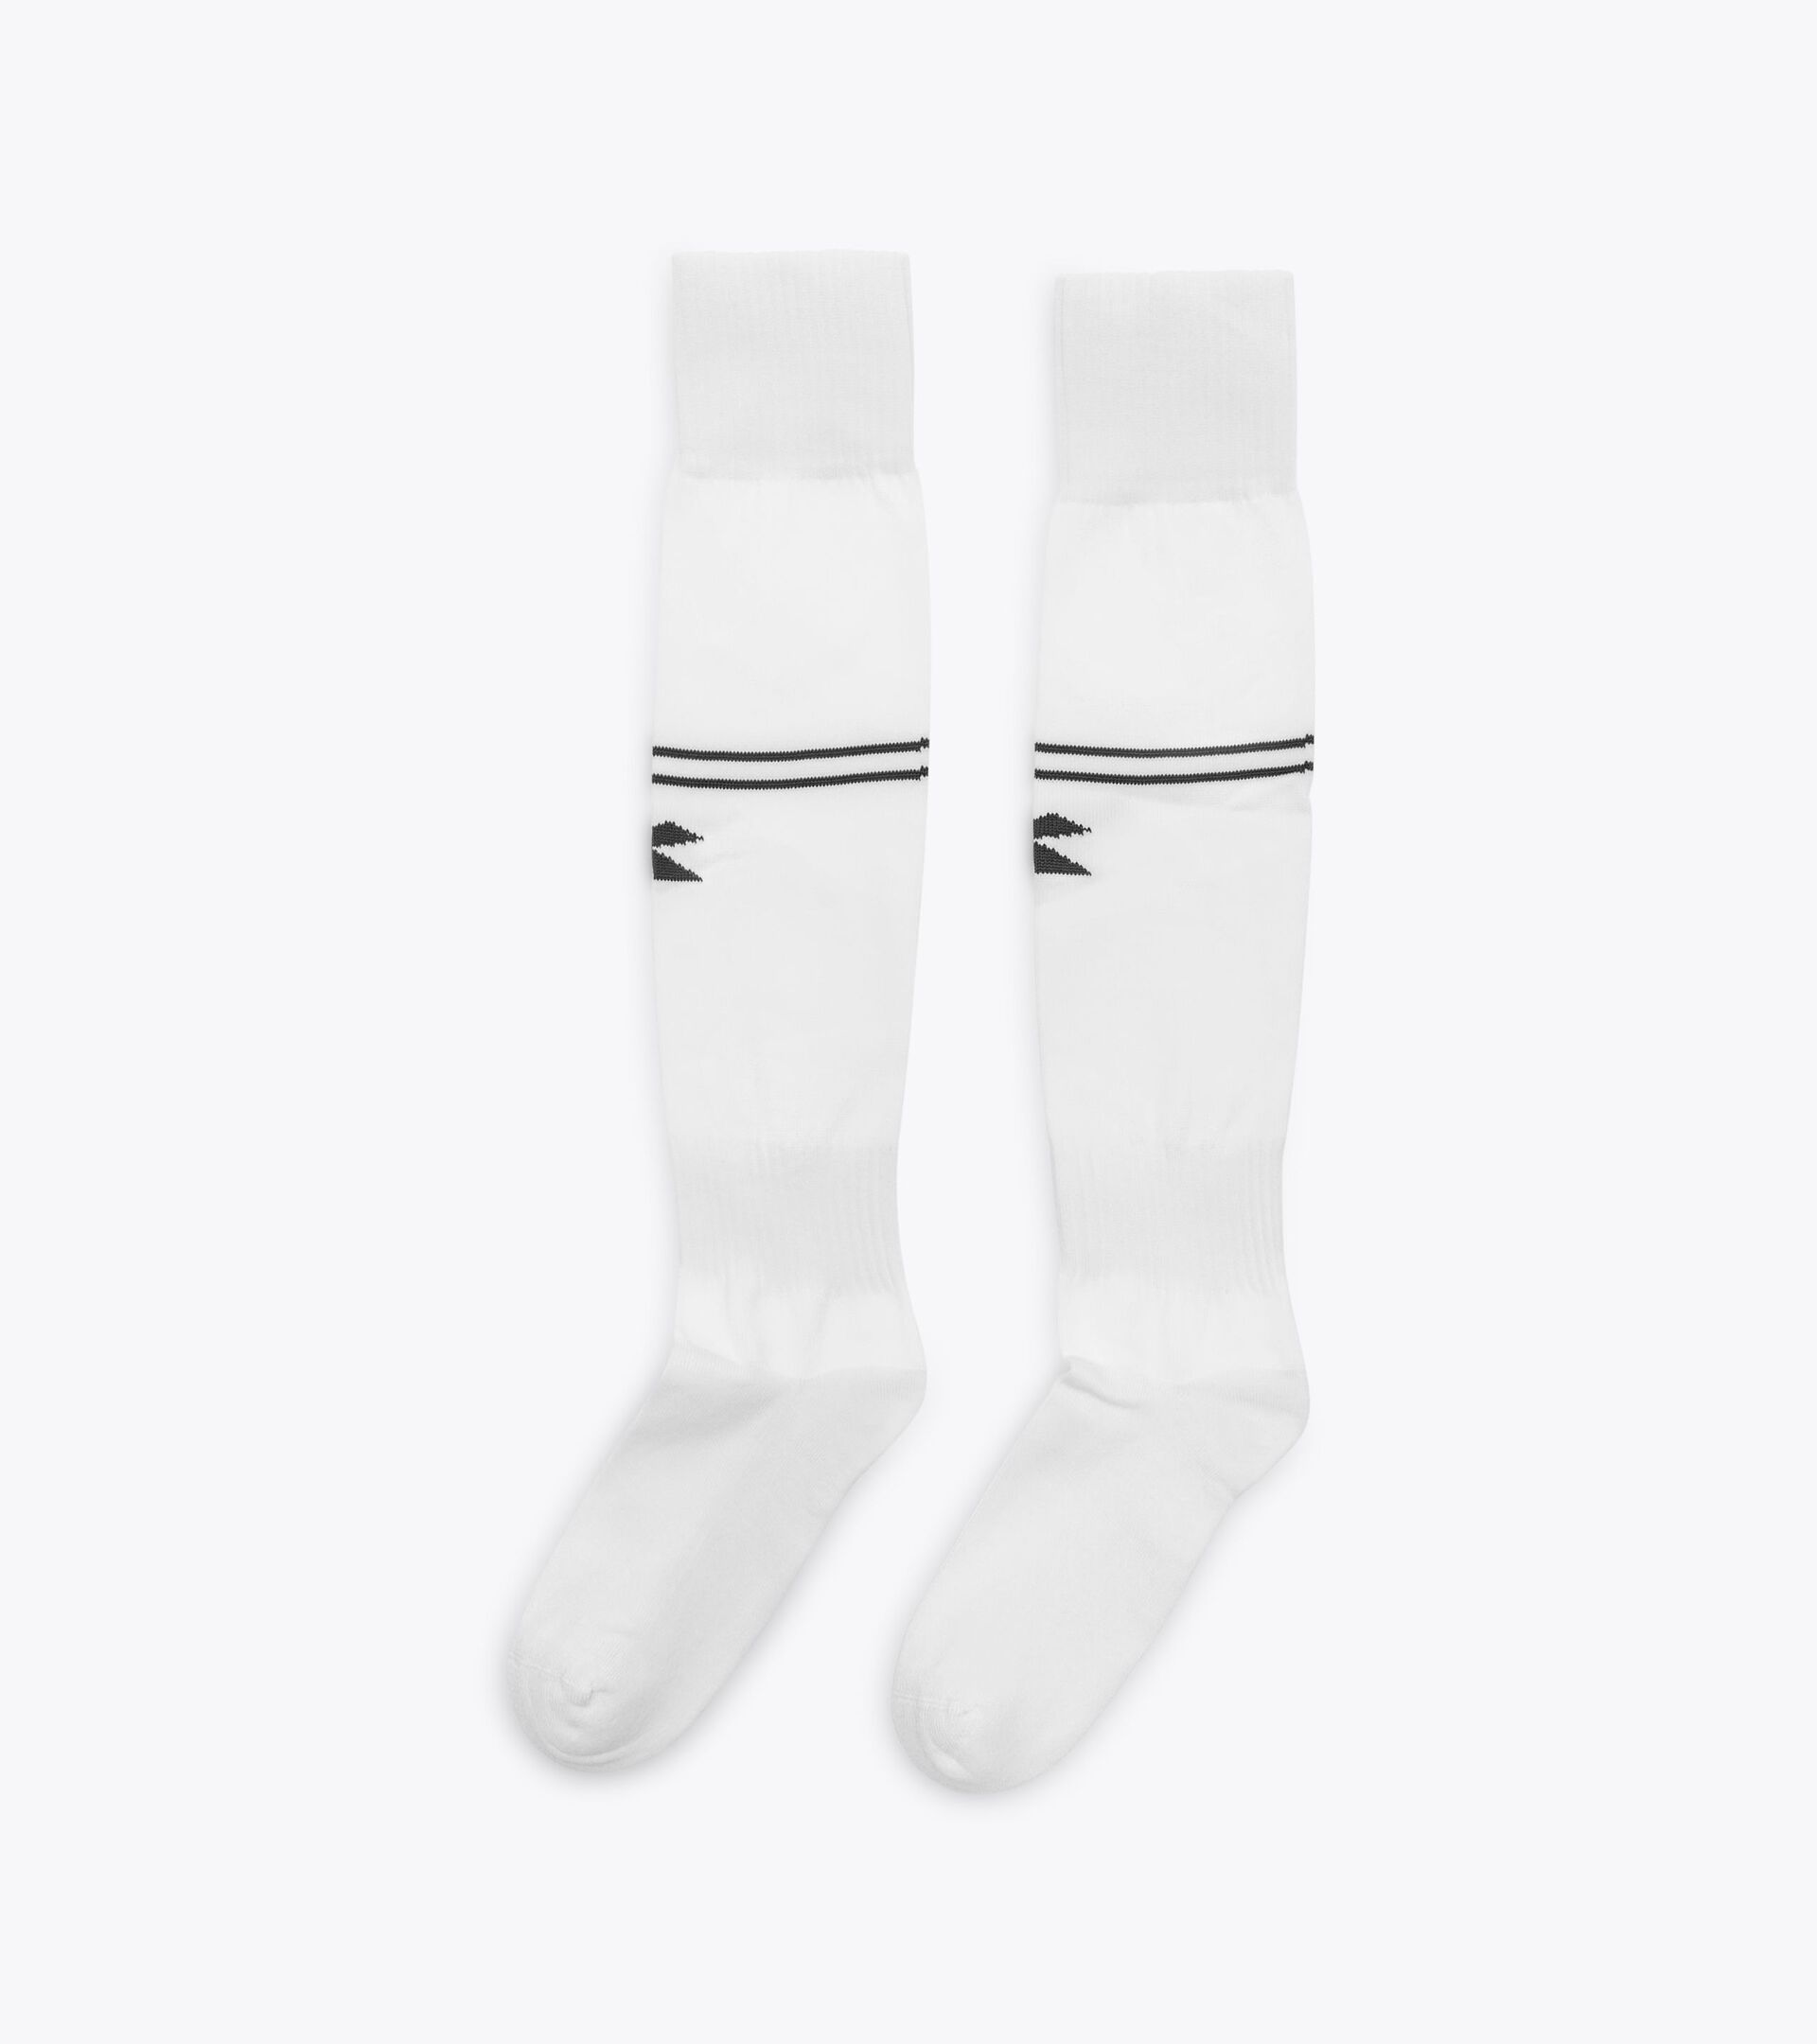 Calcio socks SOCKS SCUDETTO OPTICAL WHITE - Diadora